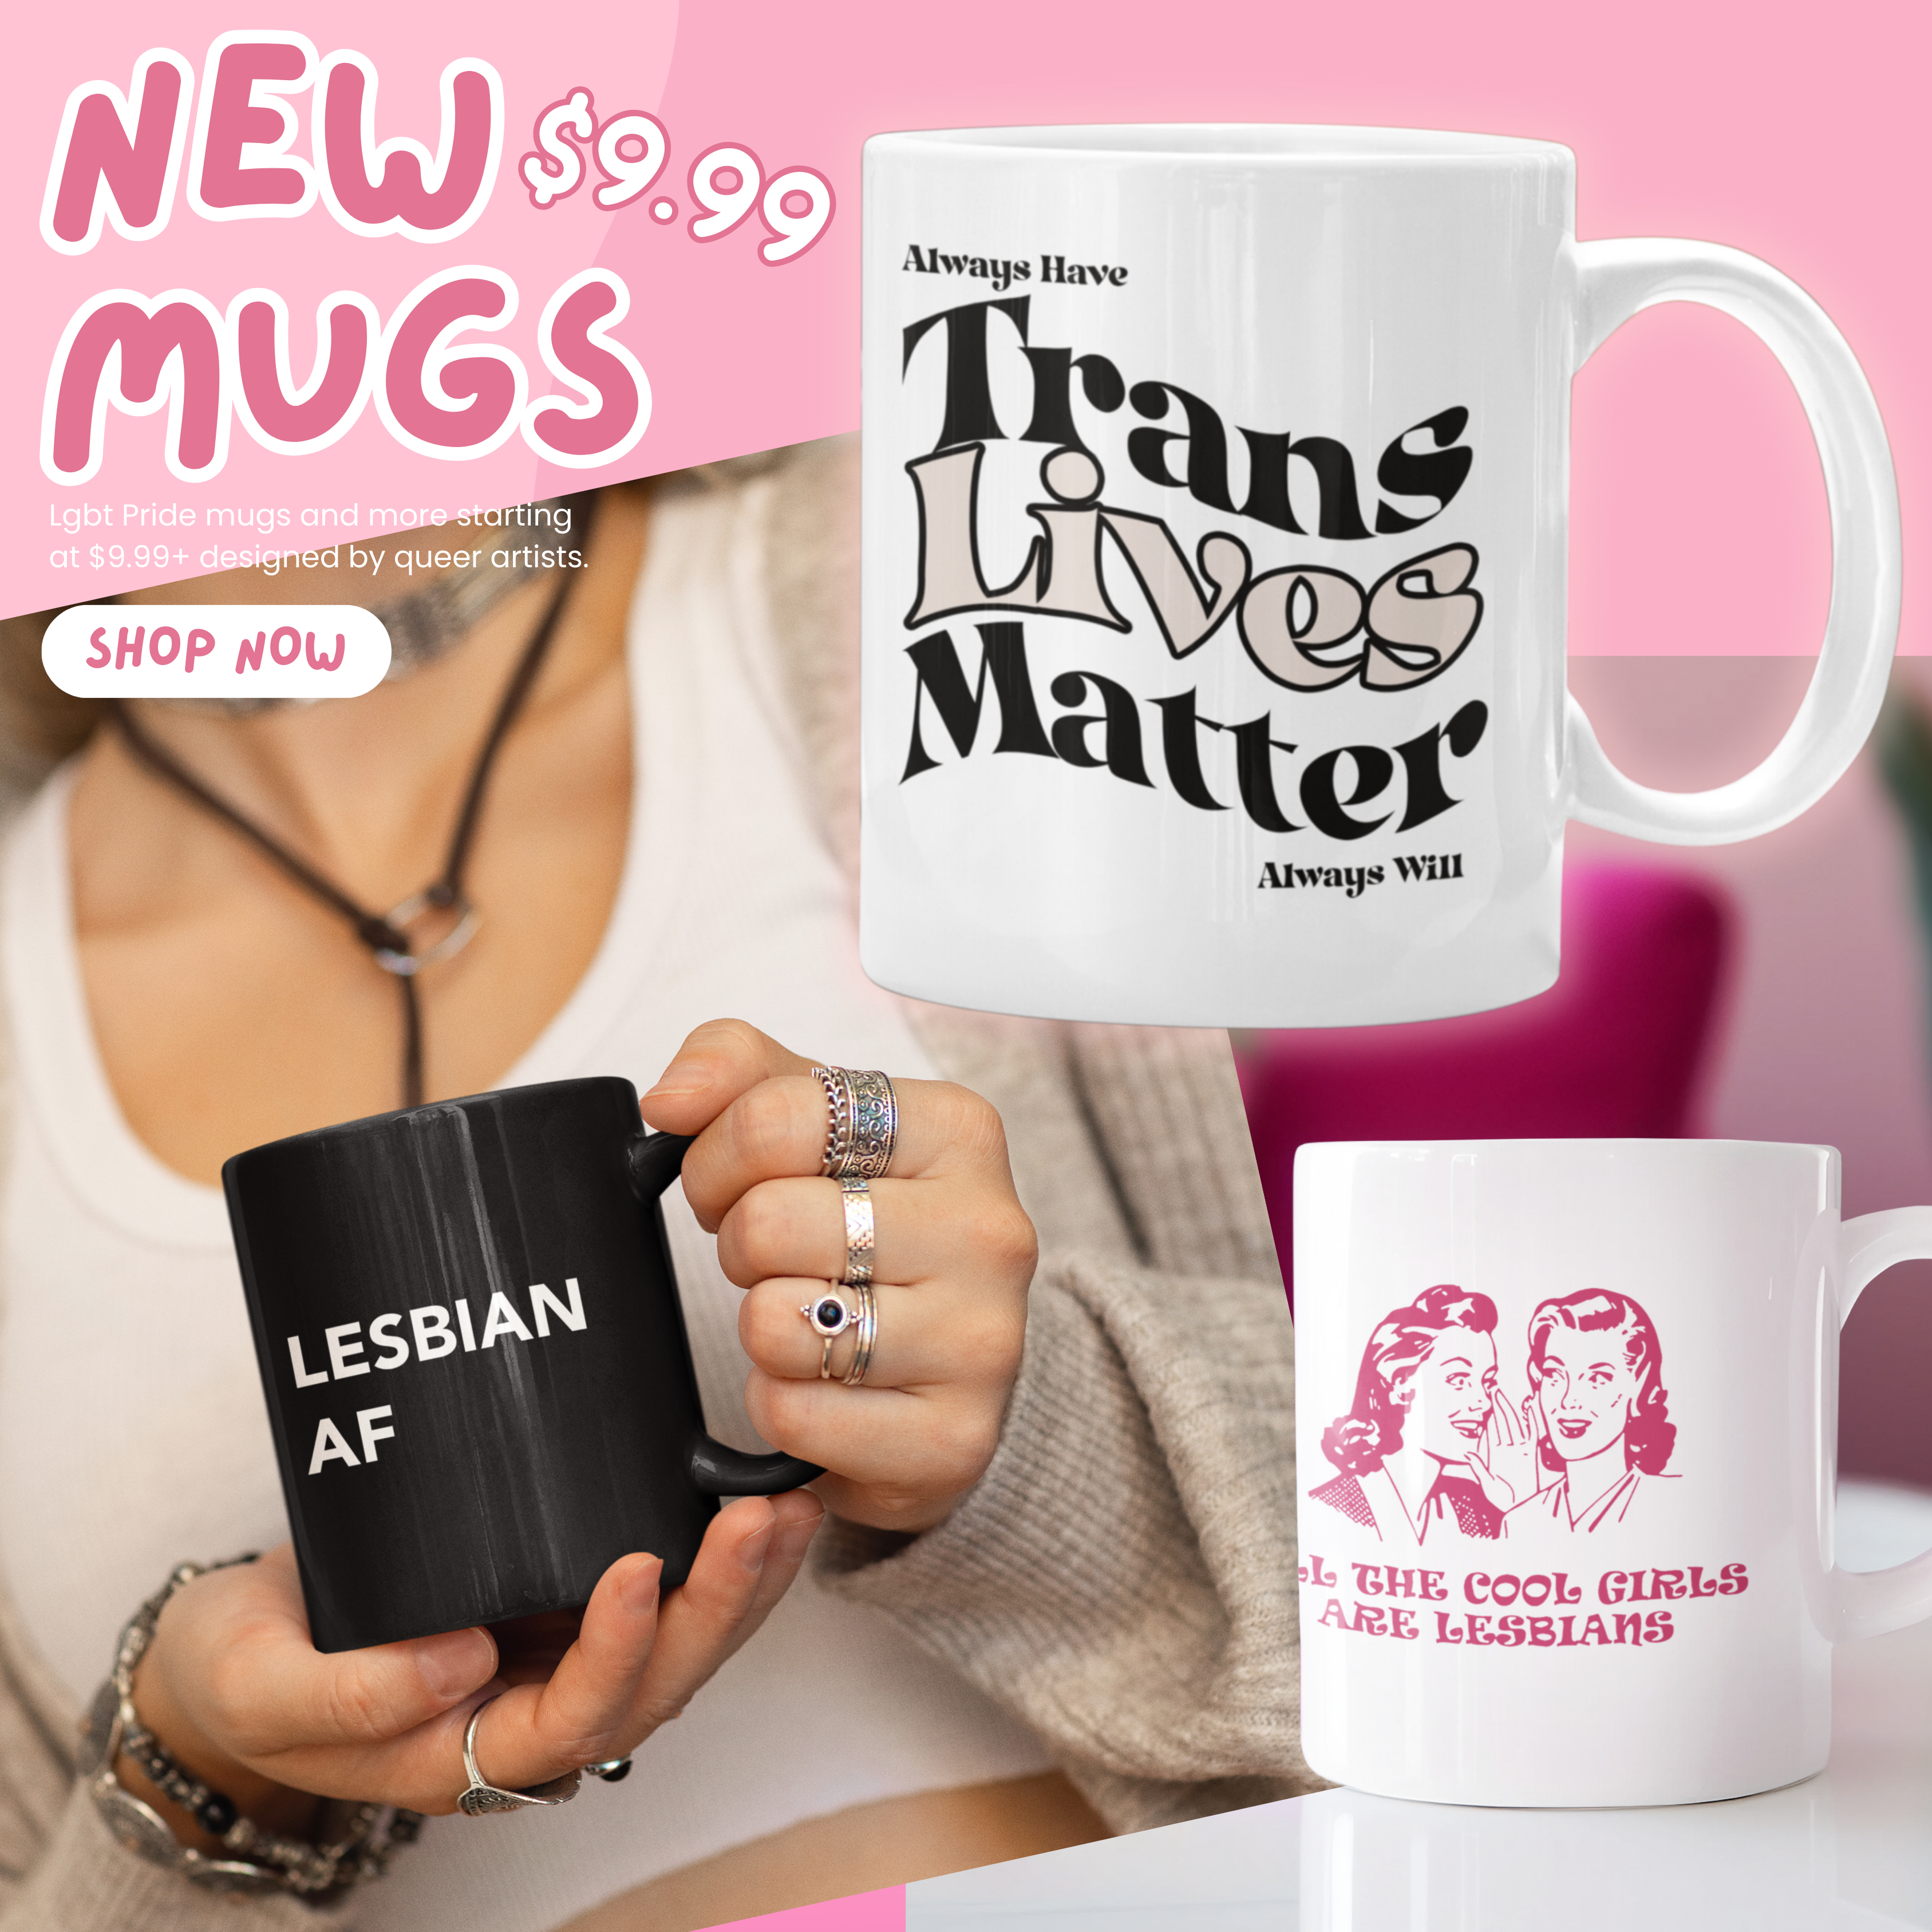 Girl holding lesbian af pride mug with trans live matter mug and all the cool girls are lesbians mug